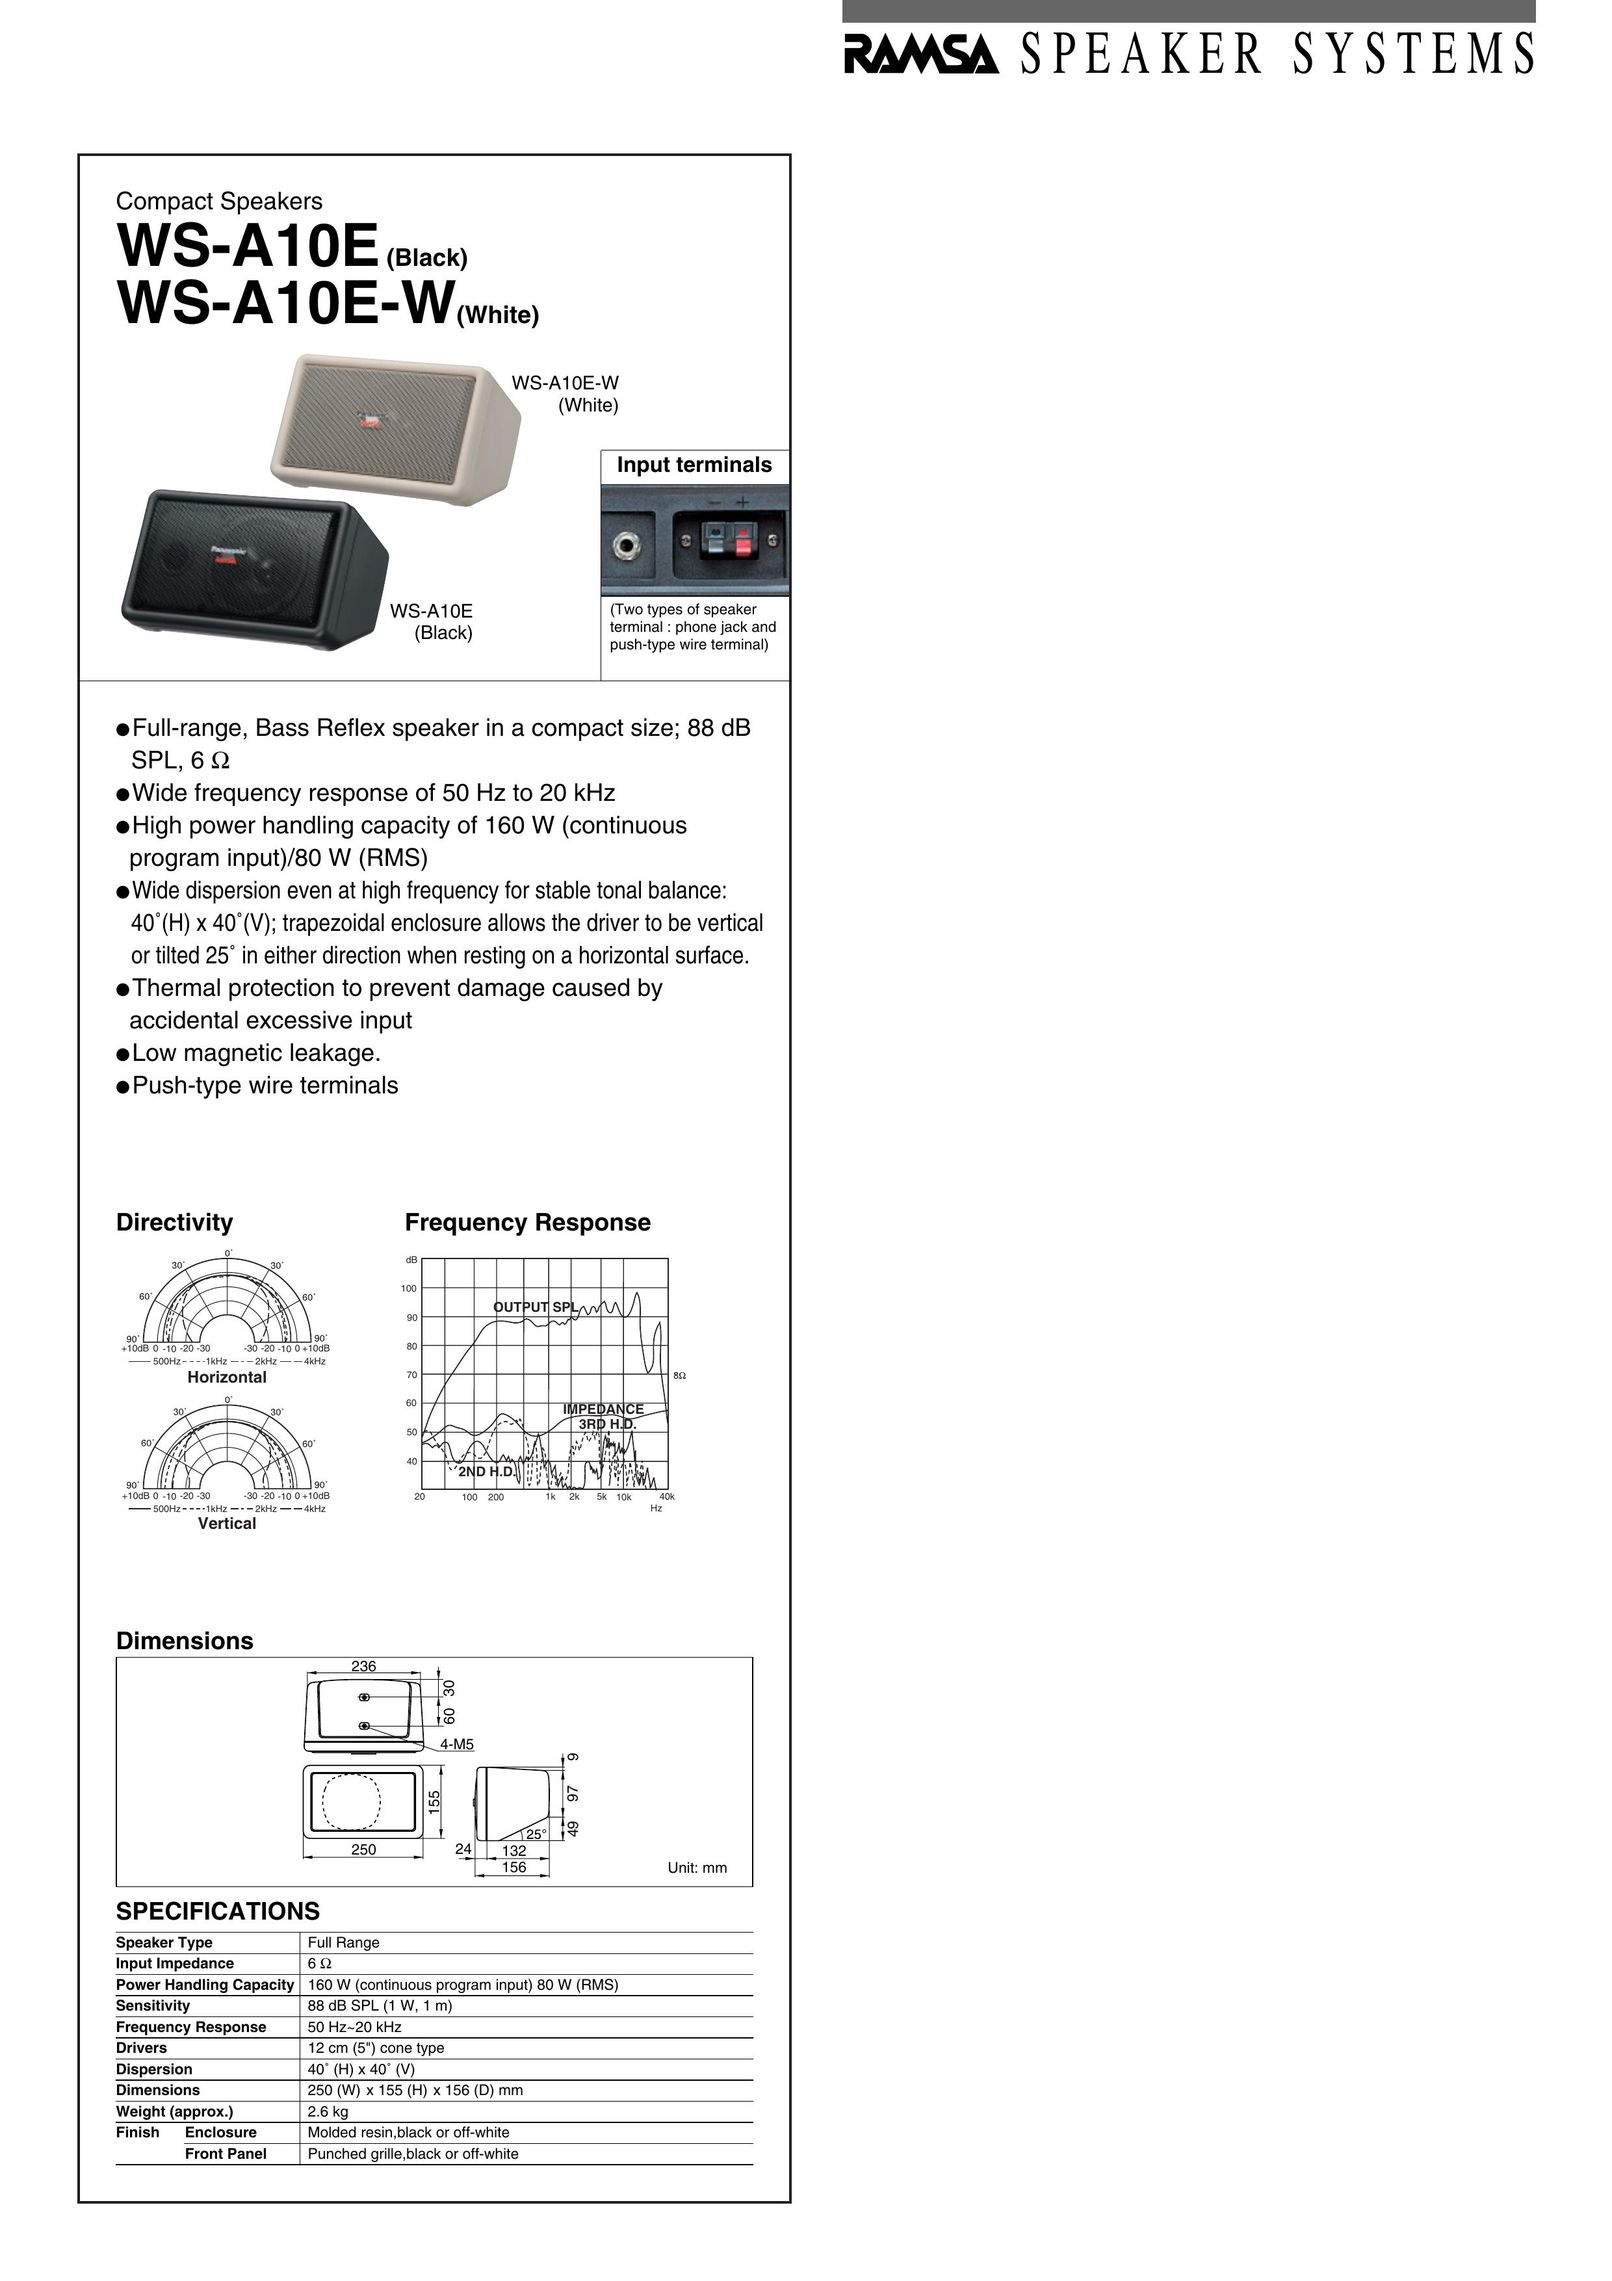 Panasonic WS-A10E-W Portable Speaker User Manual